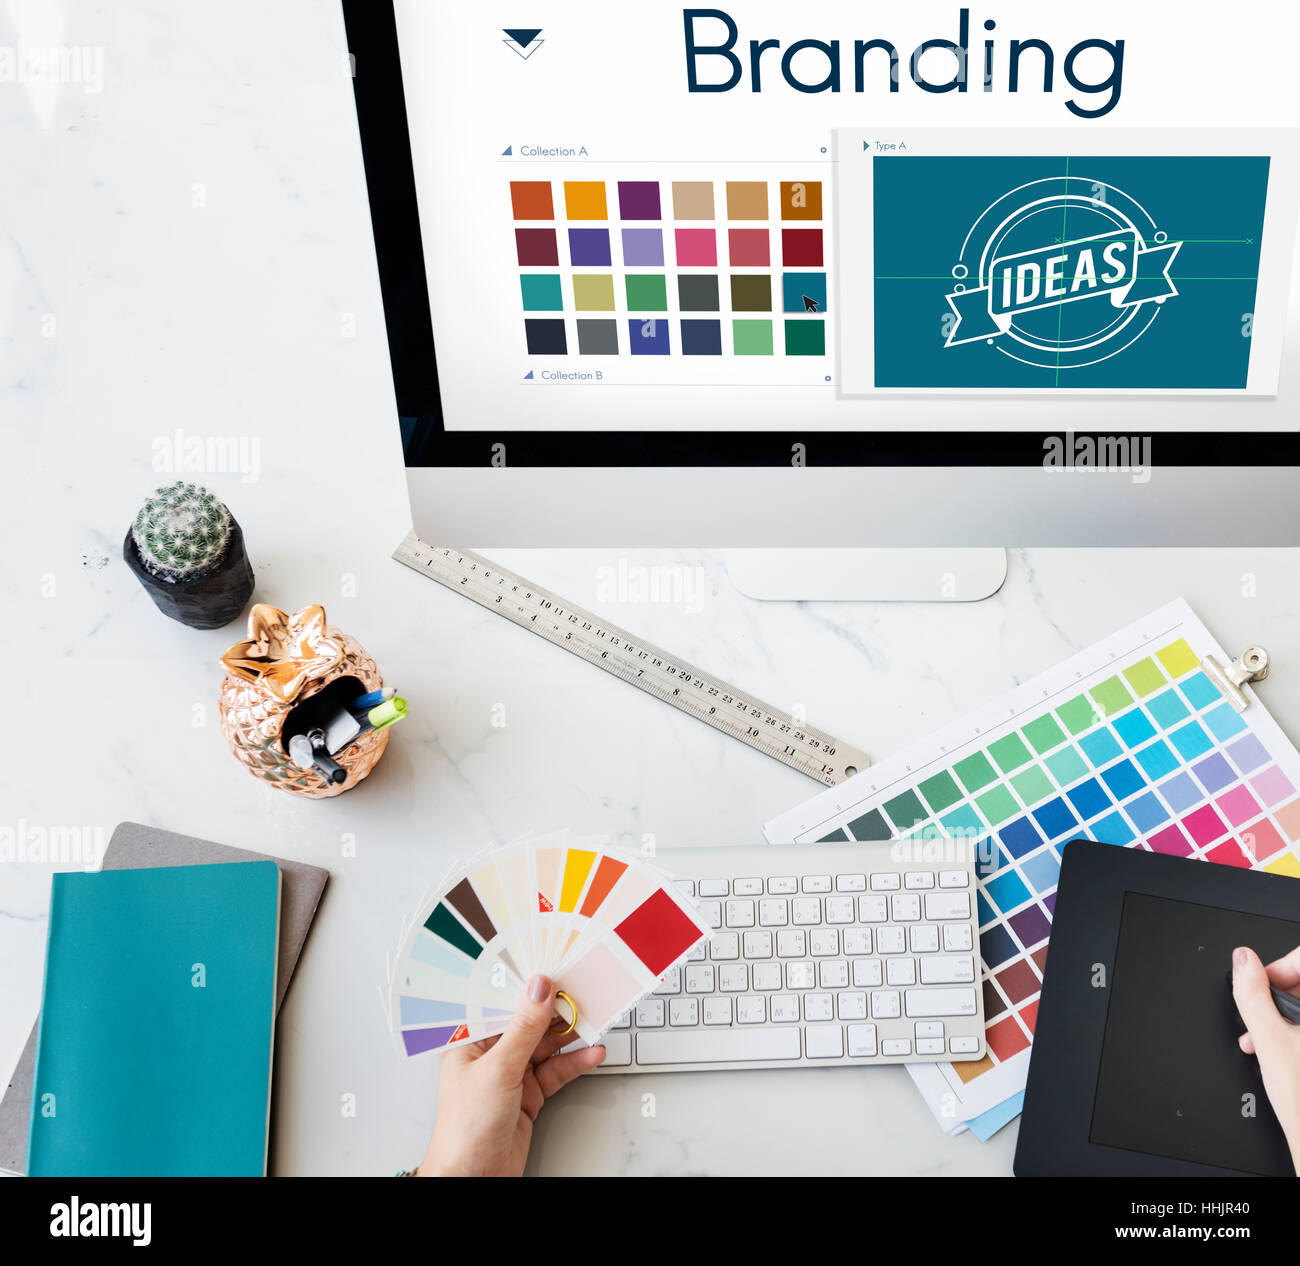 Branding Ideas Design Identitiy Marketing Concept Stock Photo